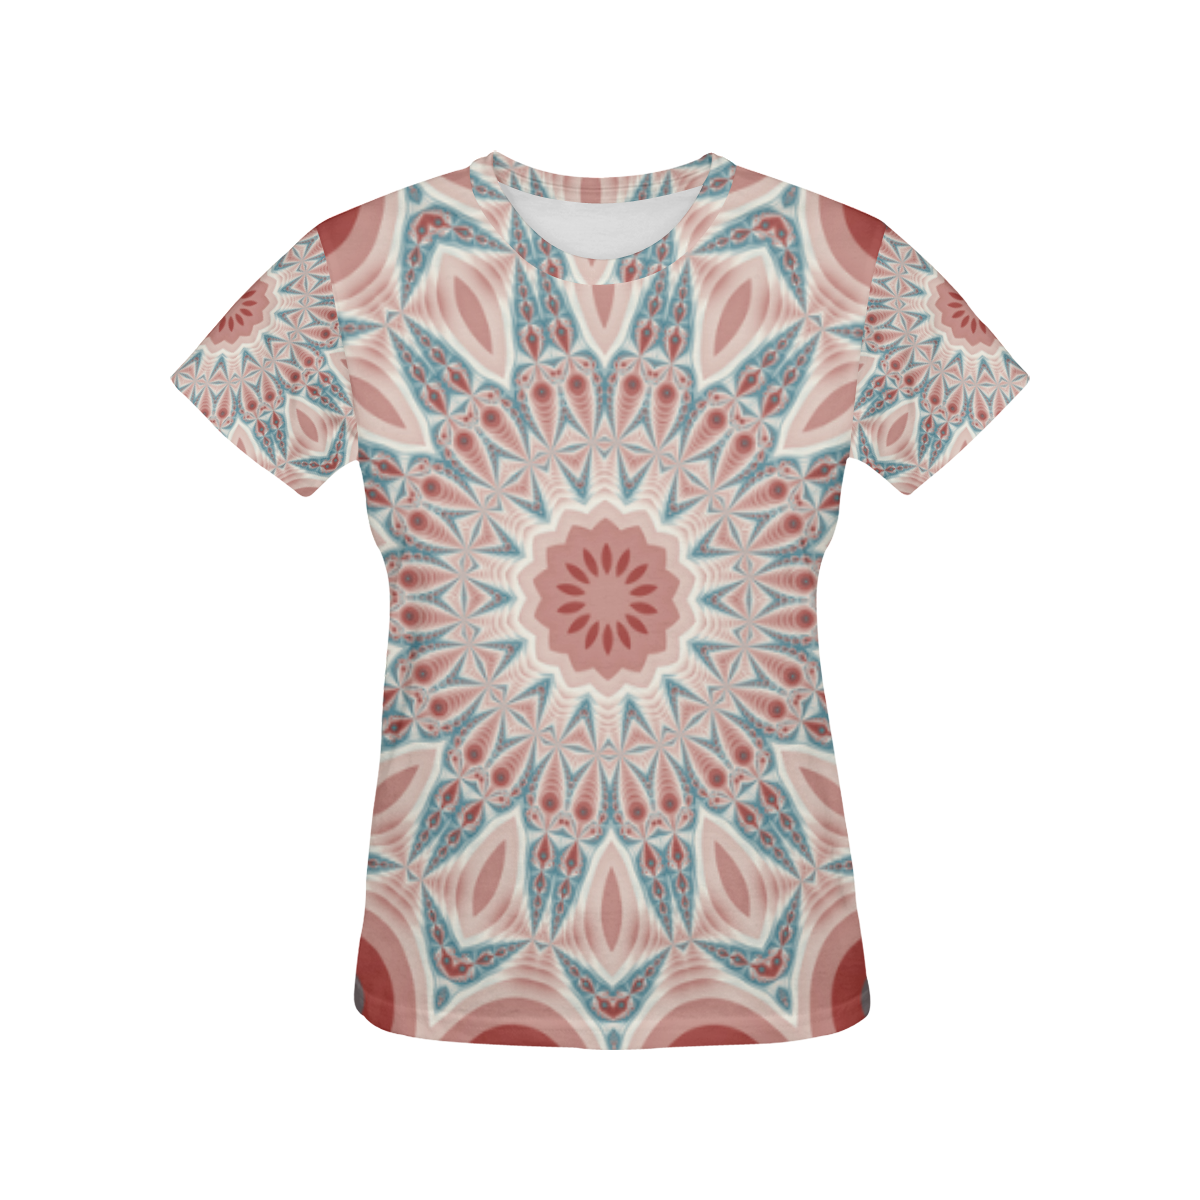 Modern Kaleidoscope Mandala Fractal Art Graphic All Over Print T-Shirt for Women (USA Size) (Model T40)